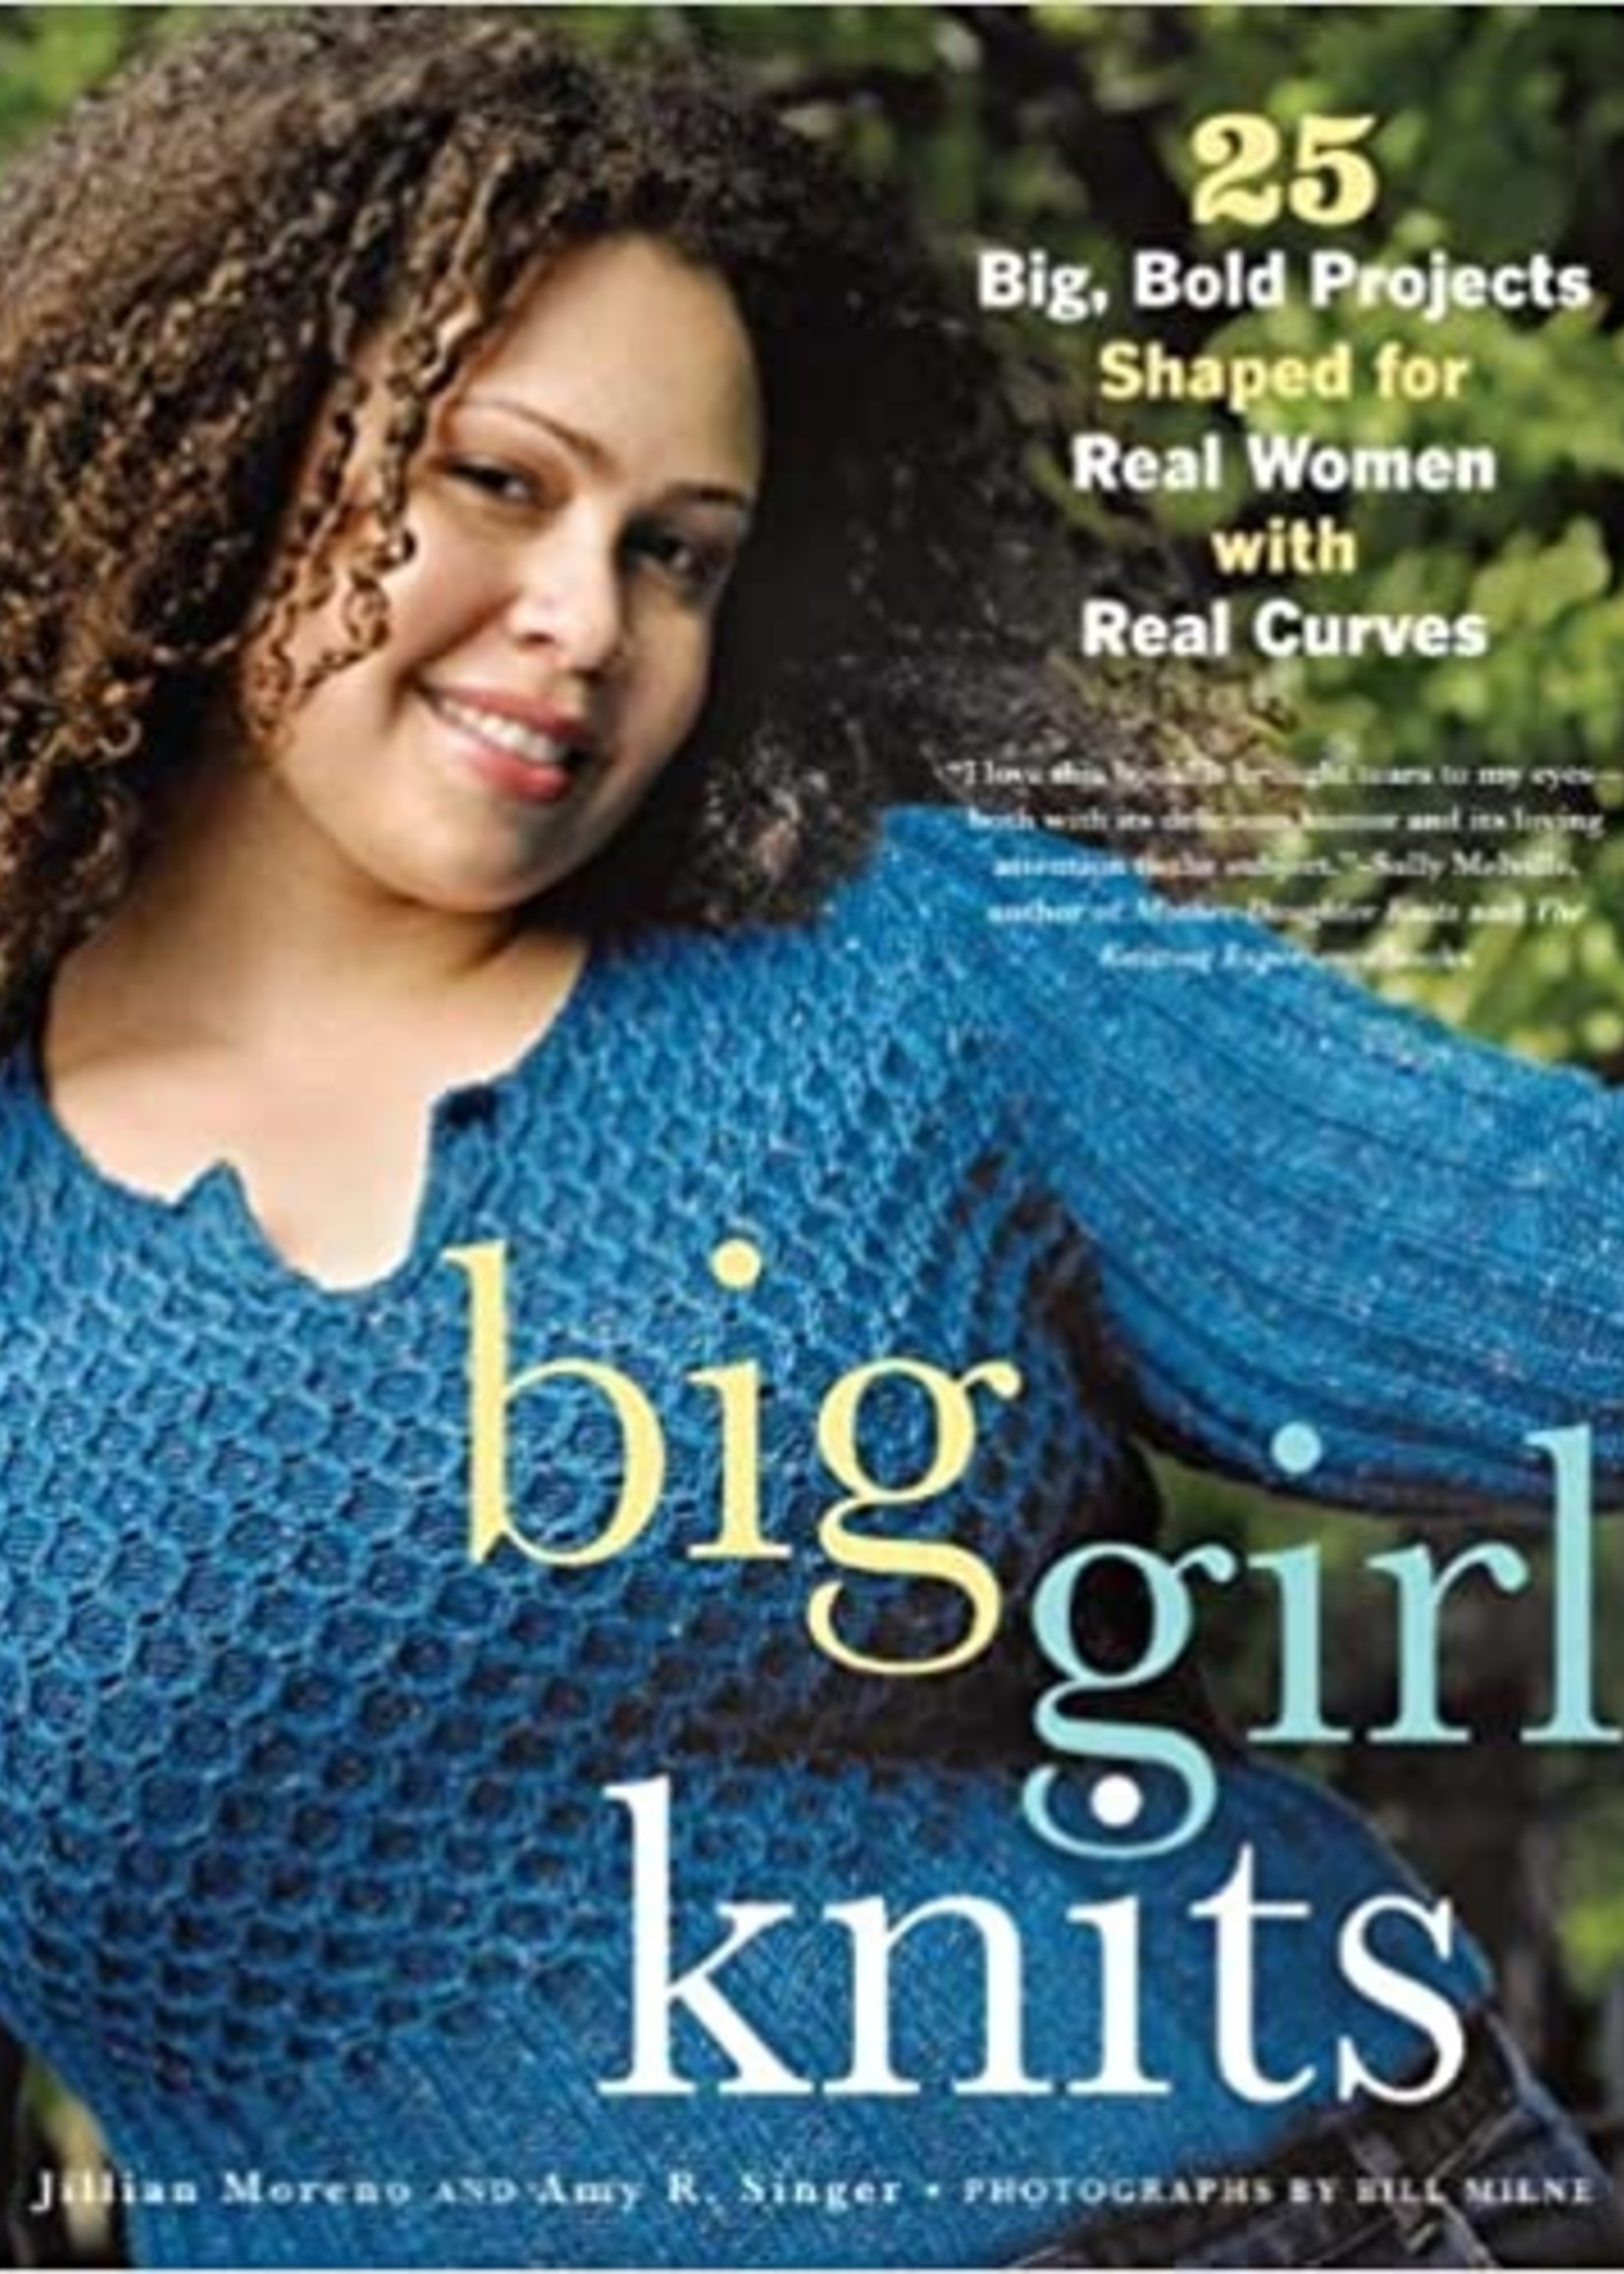 Big Girl Knits by Jillian Moreno & Amy R Singer